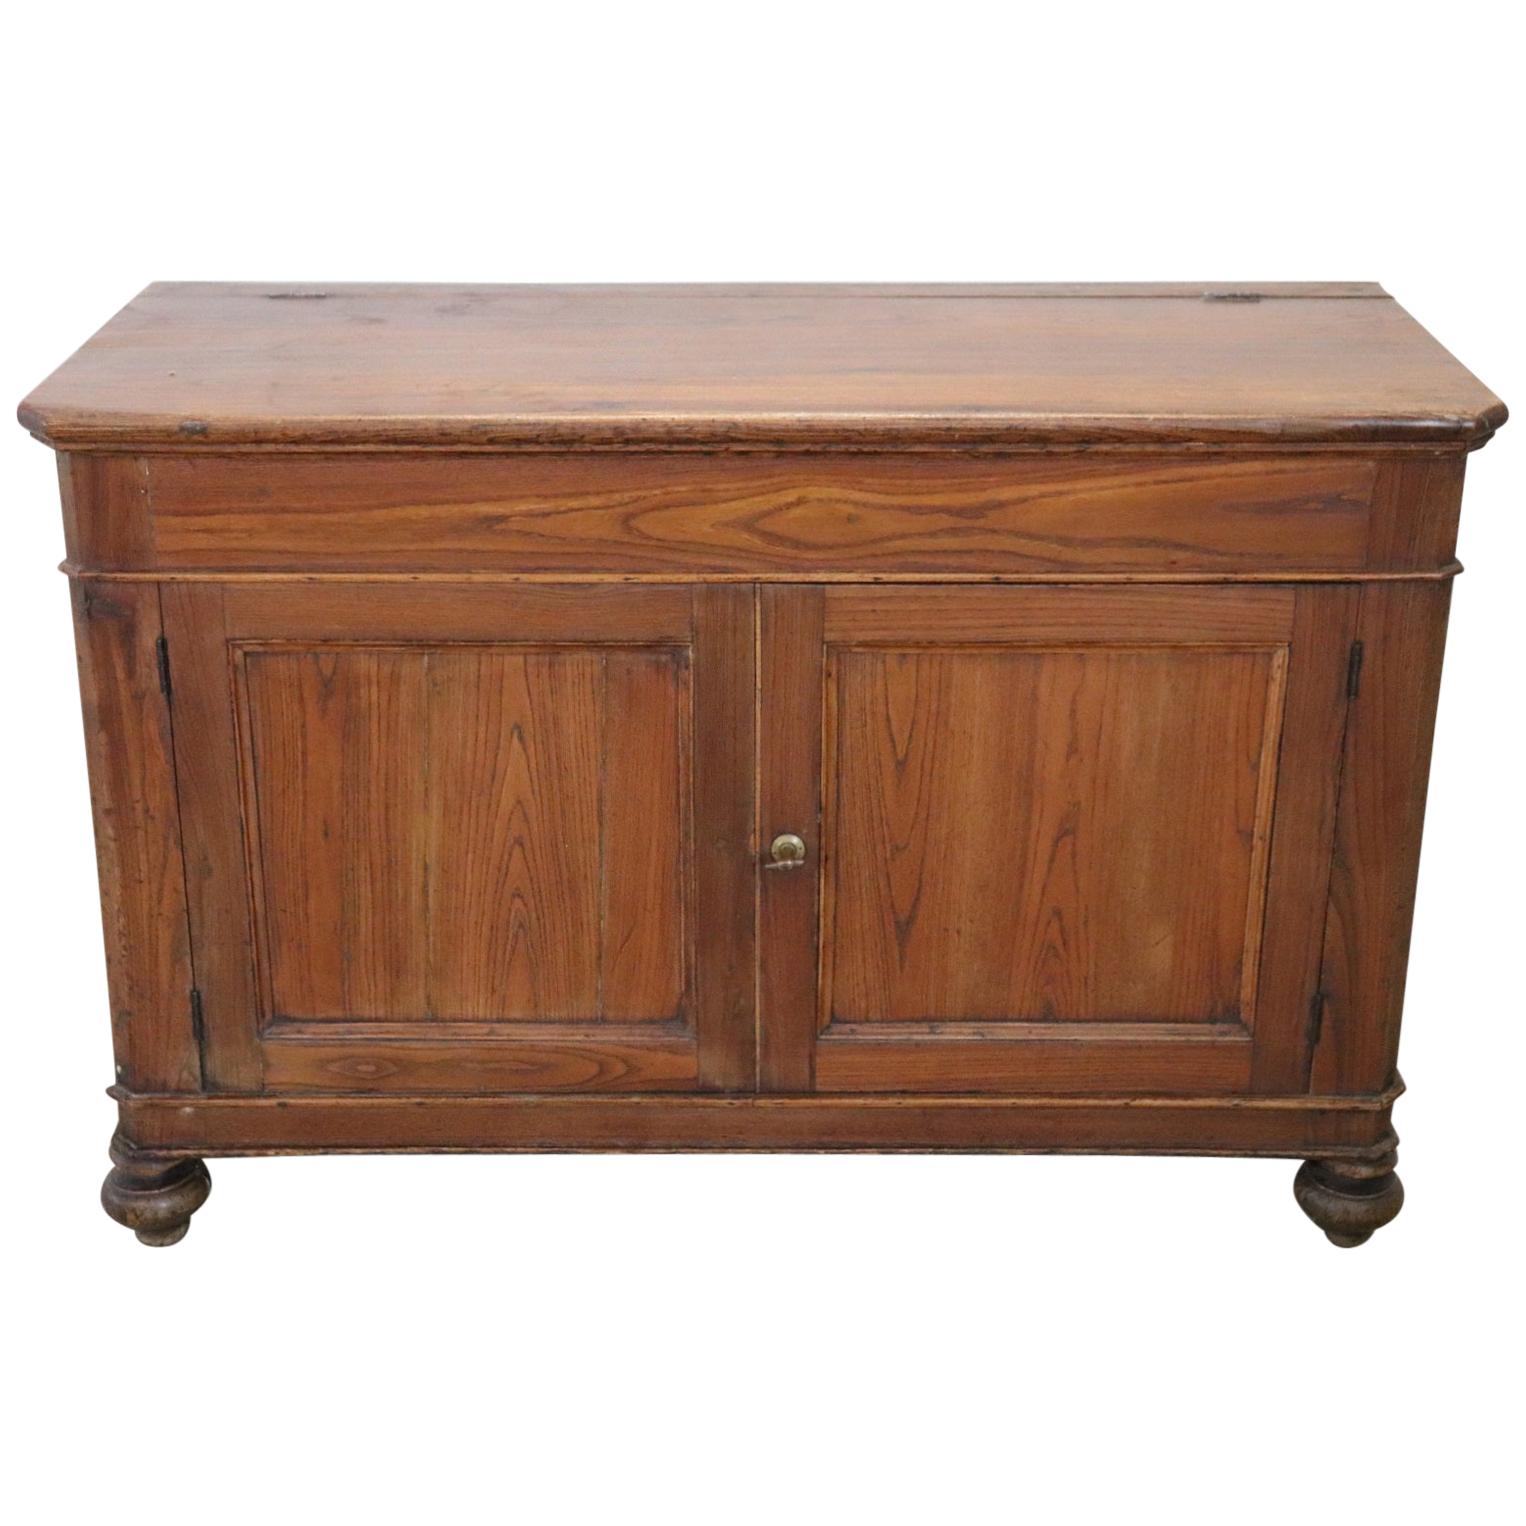 19th Century Italian Solid Oak Wood Small Rustic Sideboard, Buffet or Credenza